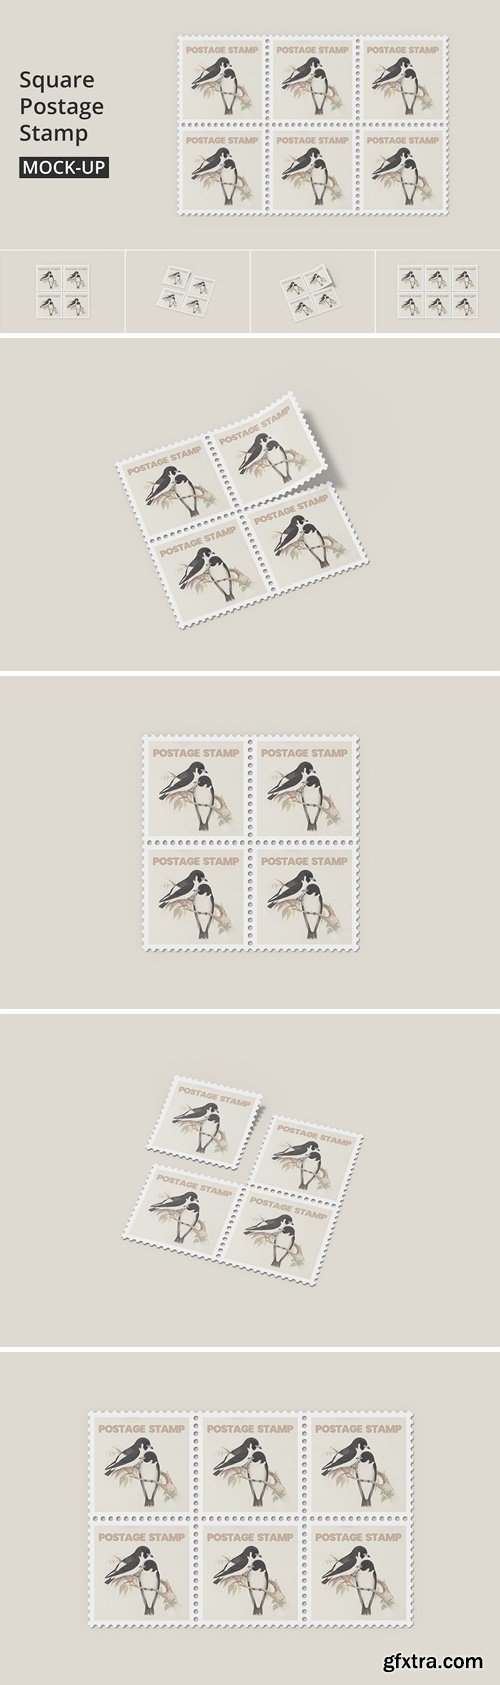 Square Postage Stamp Mockup VN7R8B2